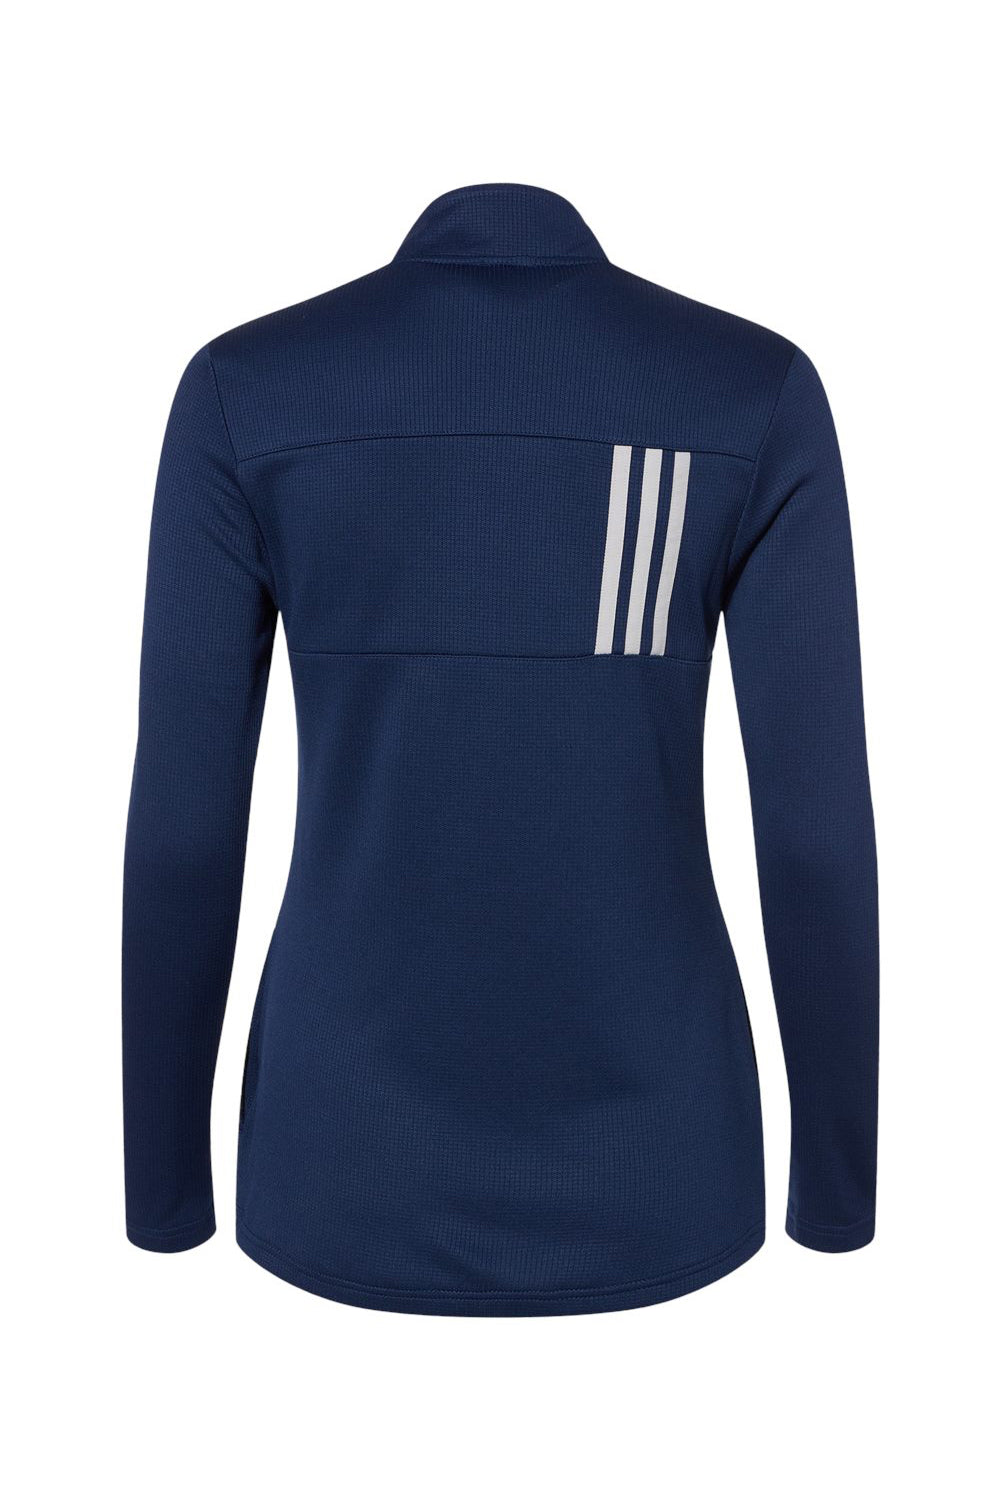 Adidas A483 Womens 3 Stripes Double Knit Moisture Wicking 1/4 Zip Sweatshirt Team Navy Blue/Grey Flat Back